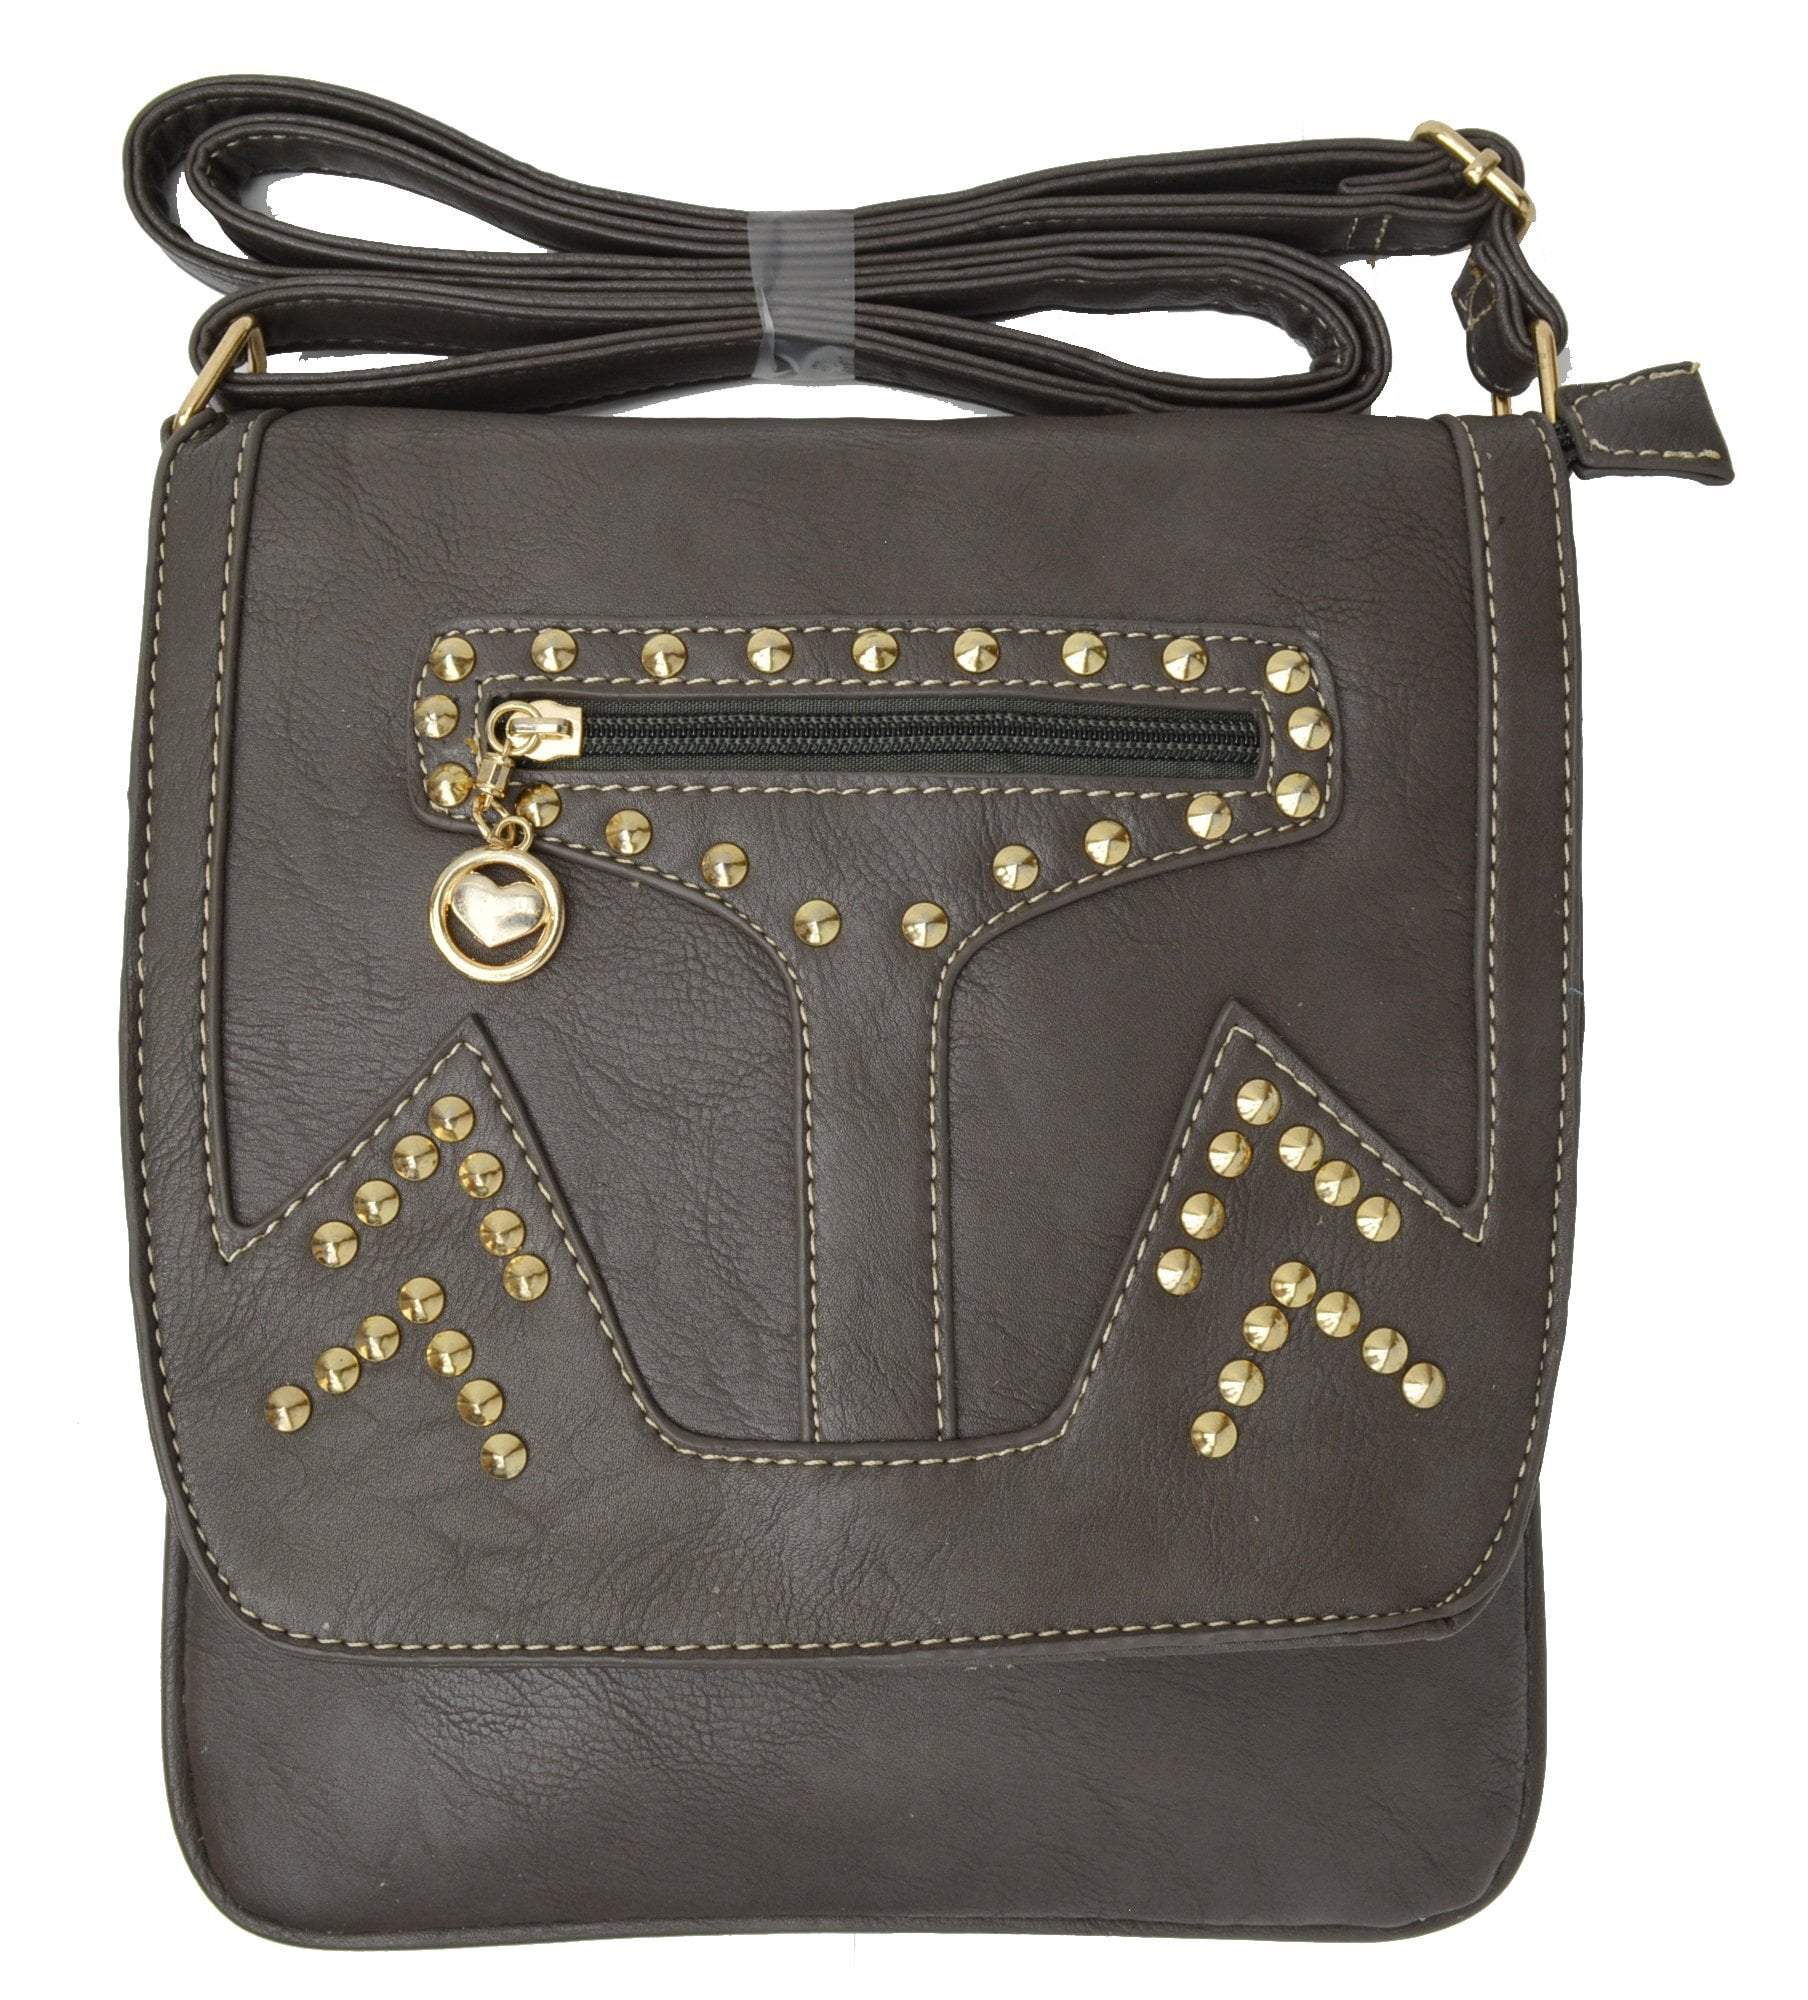 purse online,hand painted purses,hand purse designs,monogrammed clutch purse